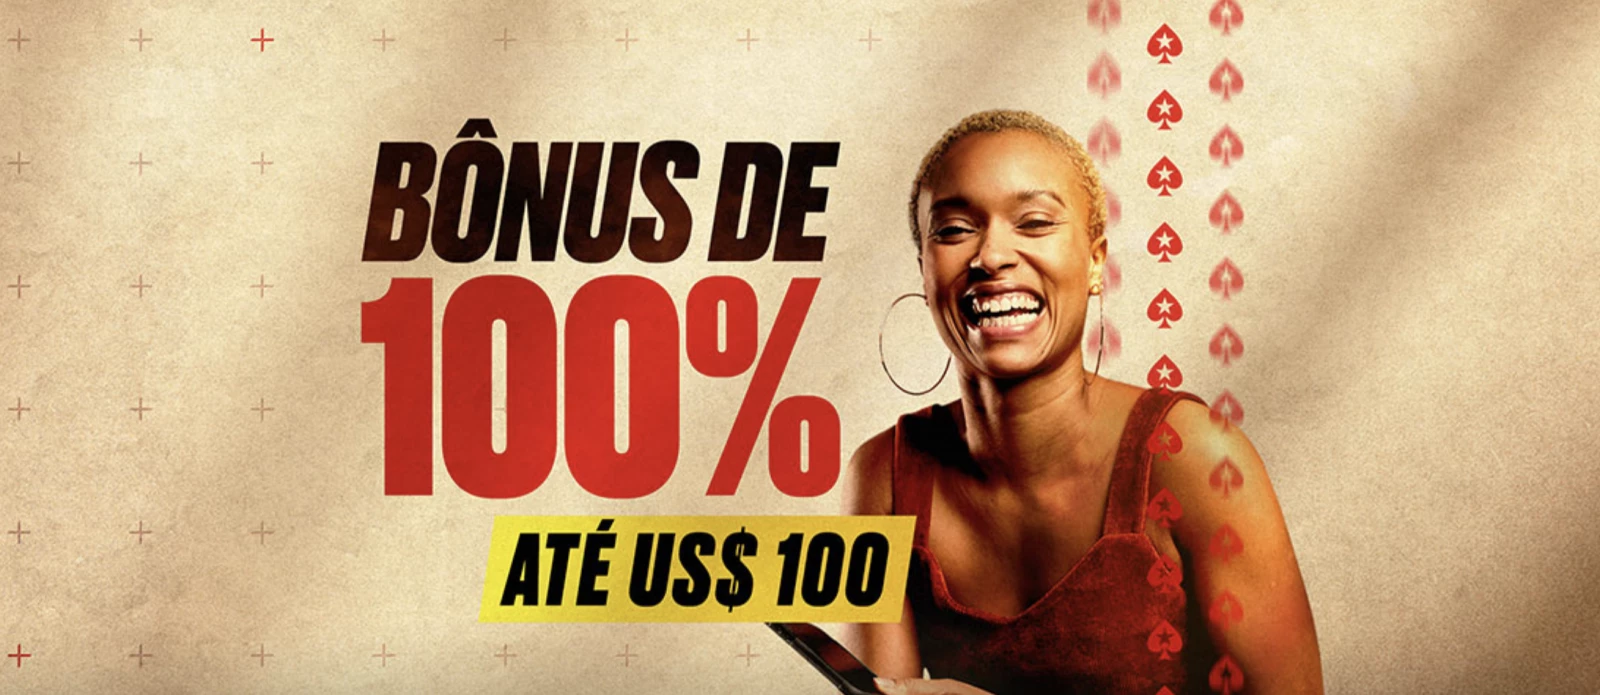 Banner do bônus de US$ 100 da Pokerstars Cassino